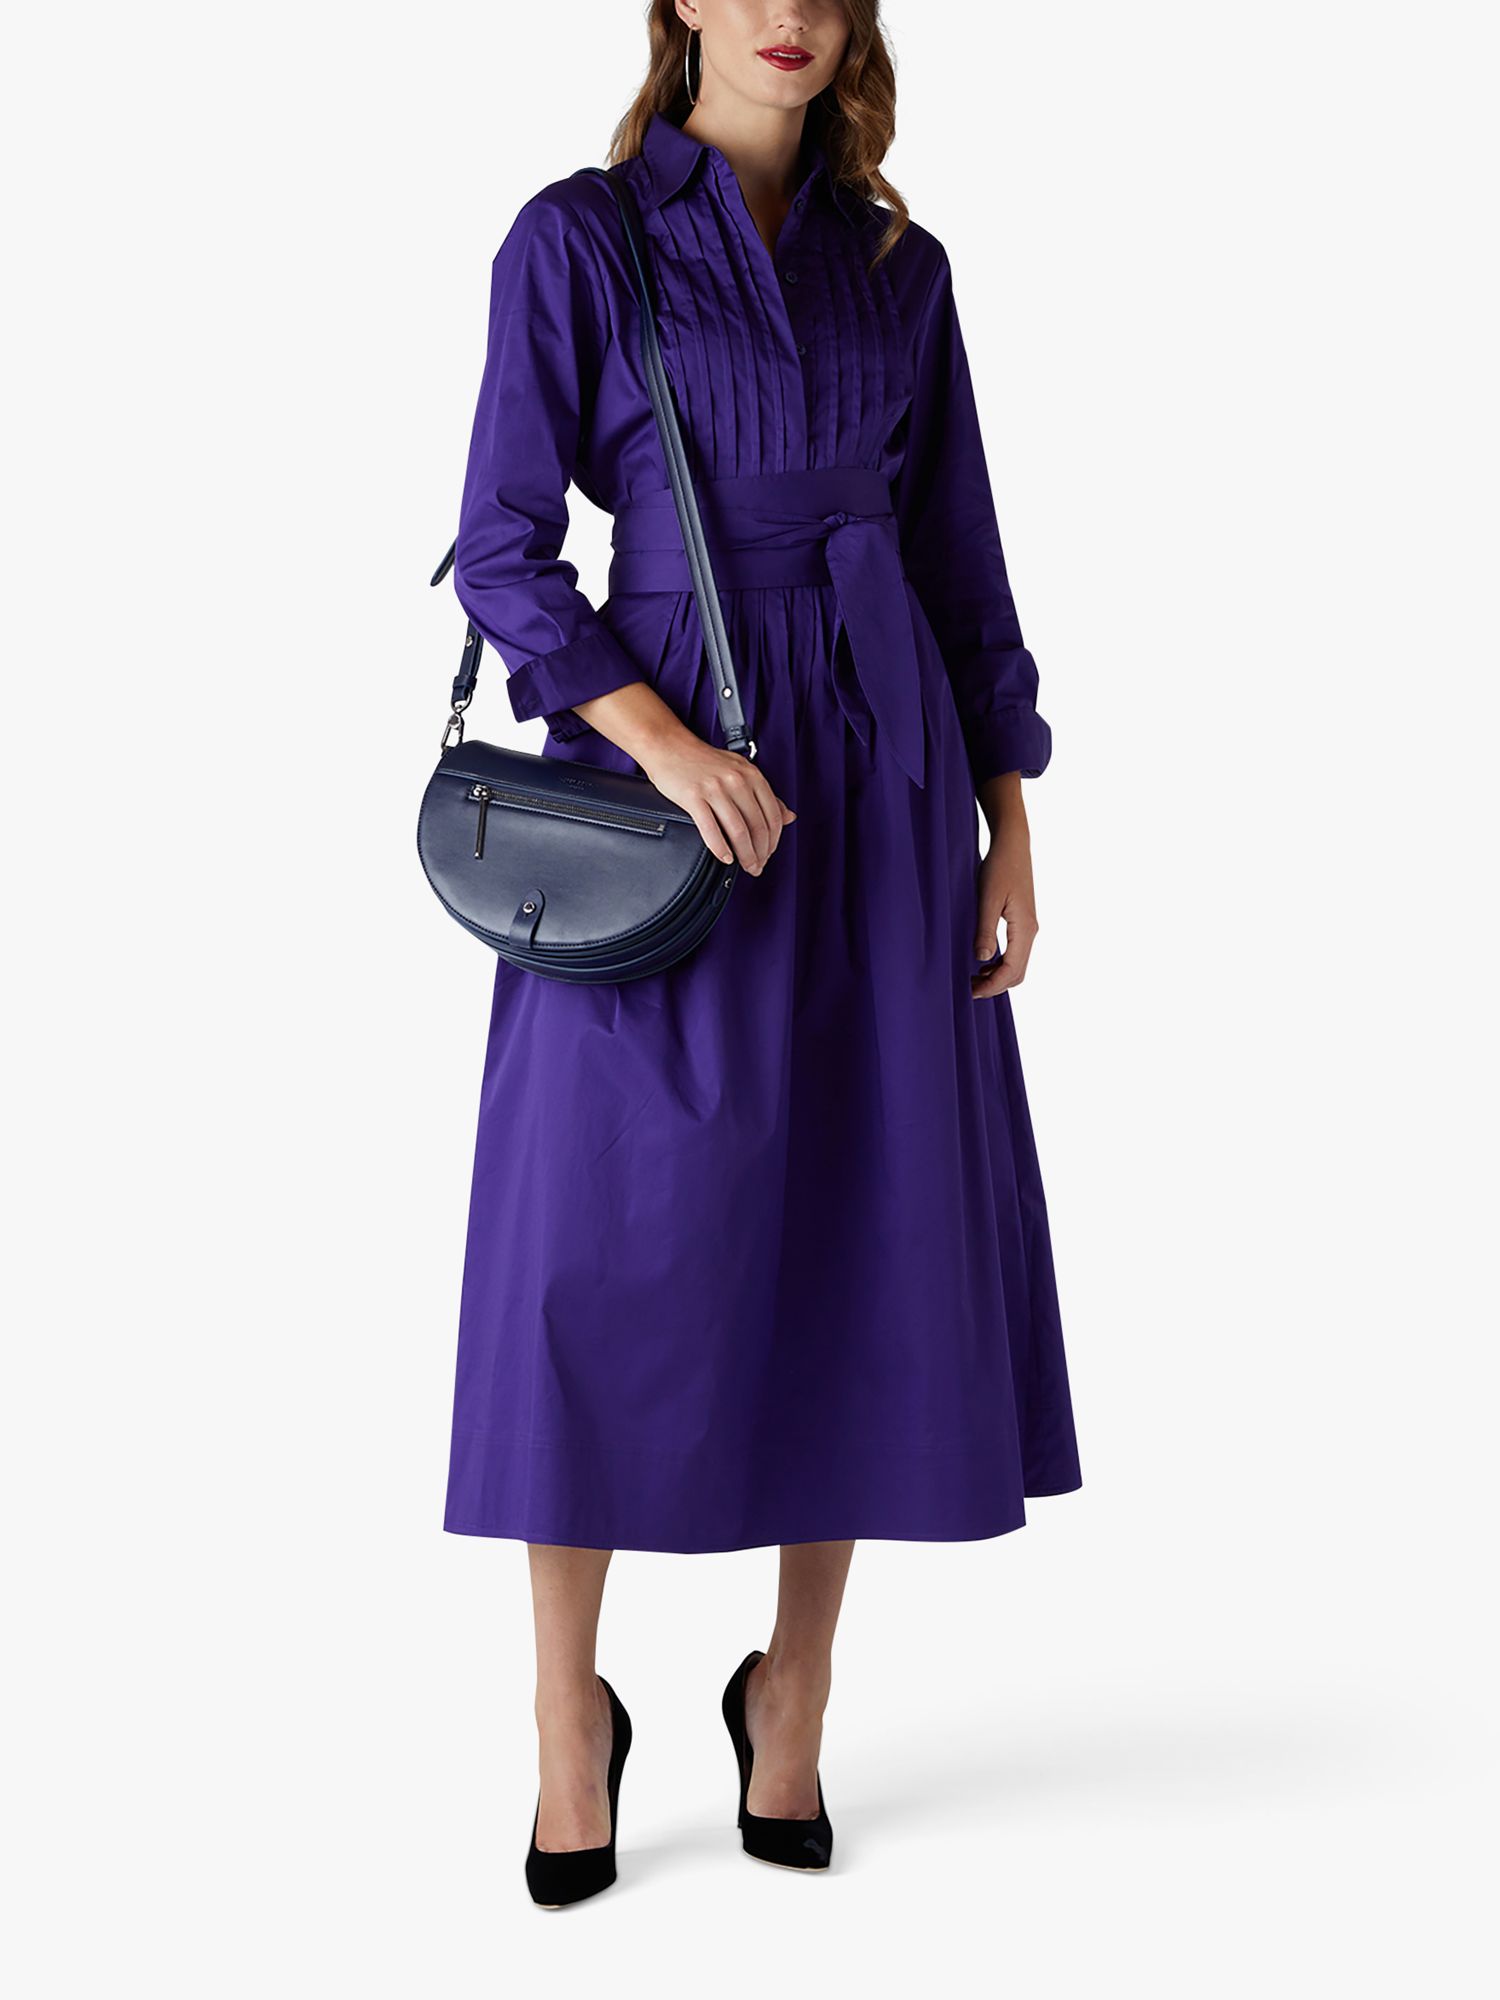 Jasper Conran London Emily Pintuck Full Skirt Midi Shirt Dress, Mid Purple, 8